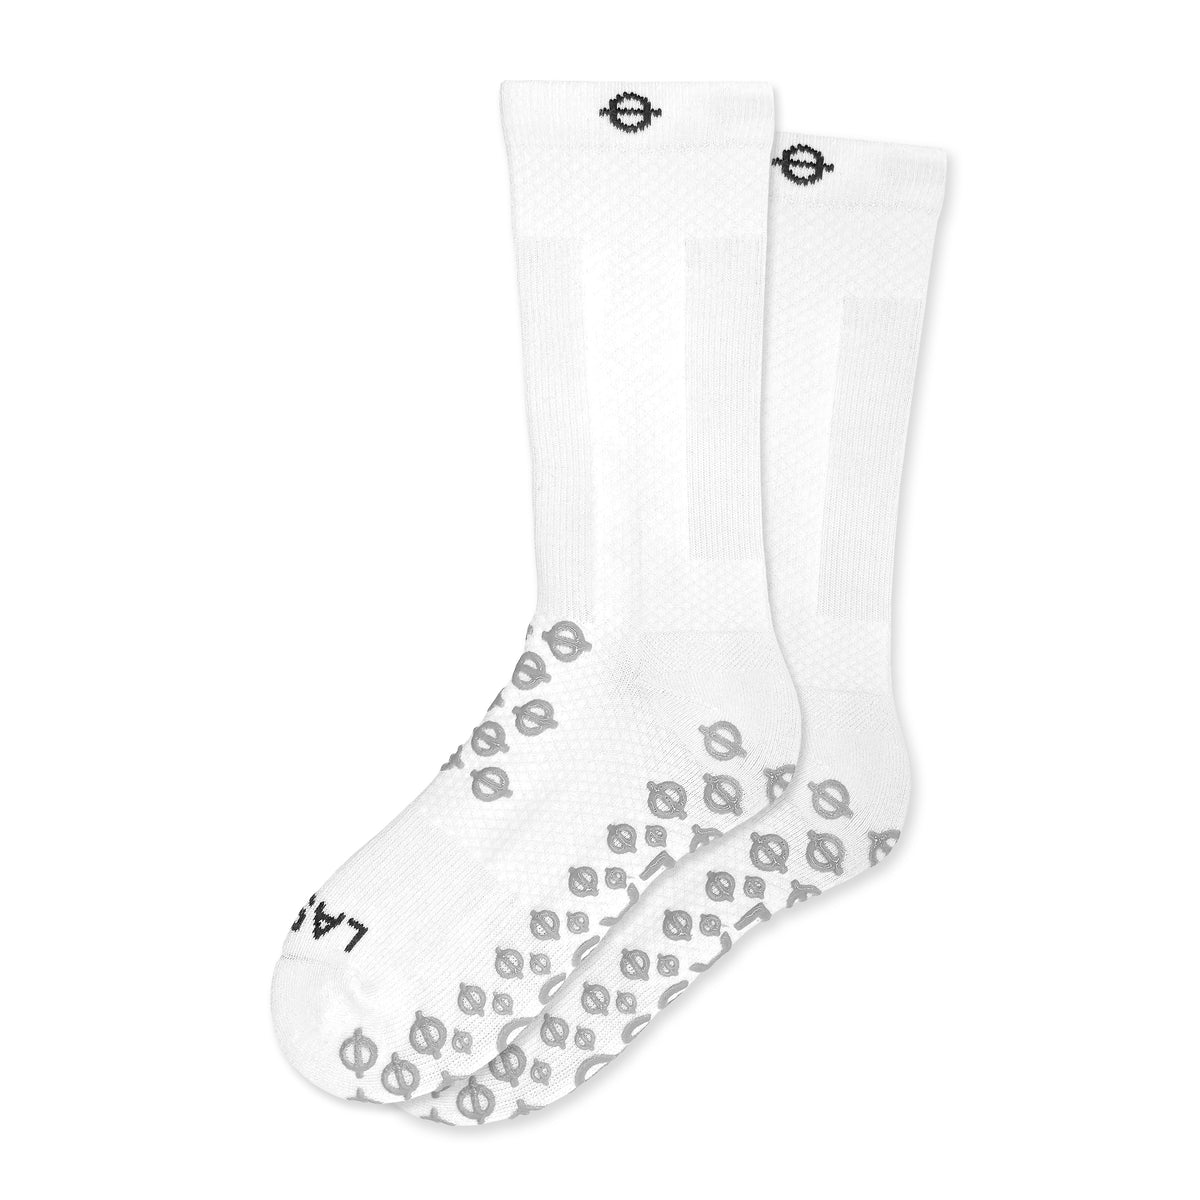 Gravity Pro Grip Socks Crew Length, White / L